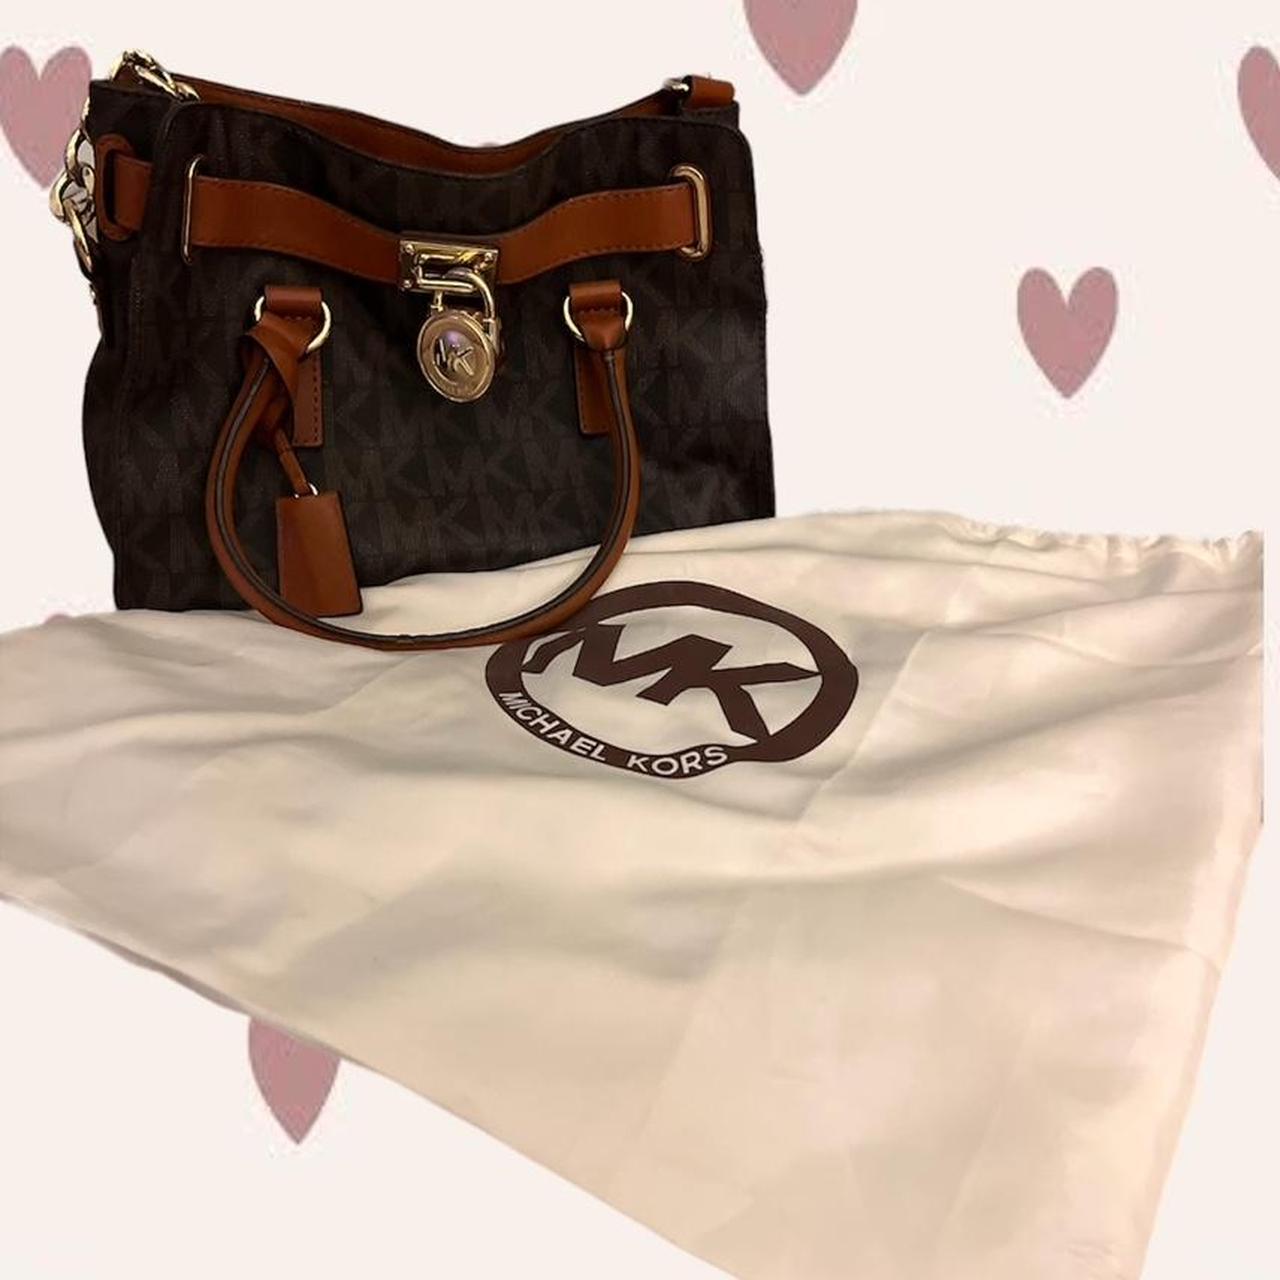 Michael Kors Women's Brown Bag | Depop